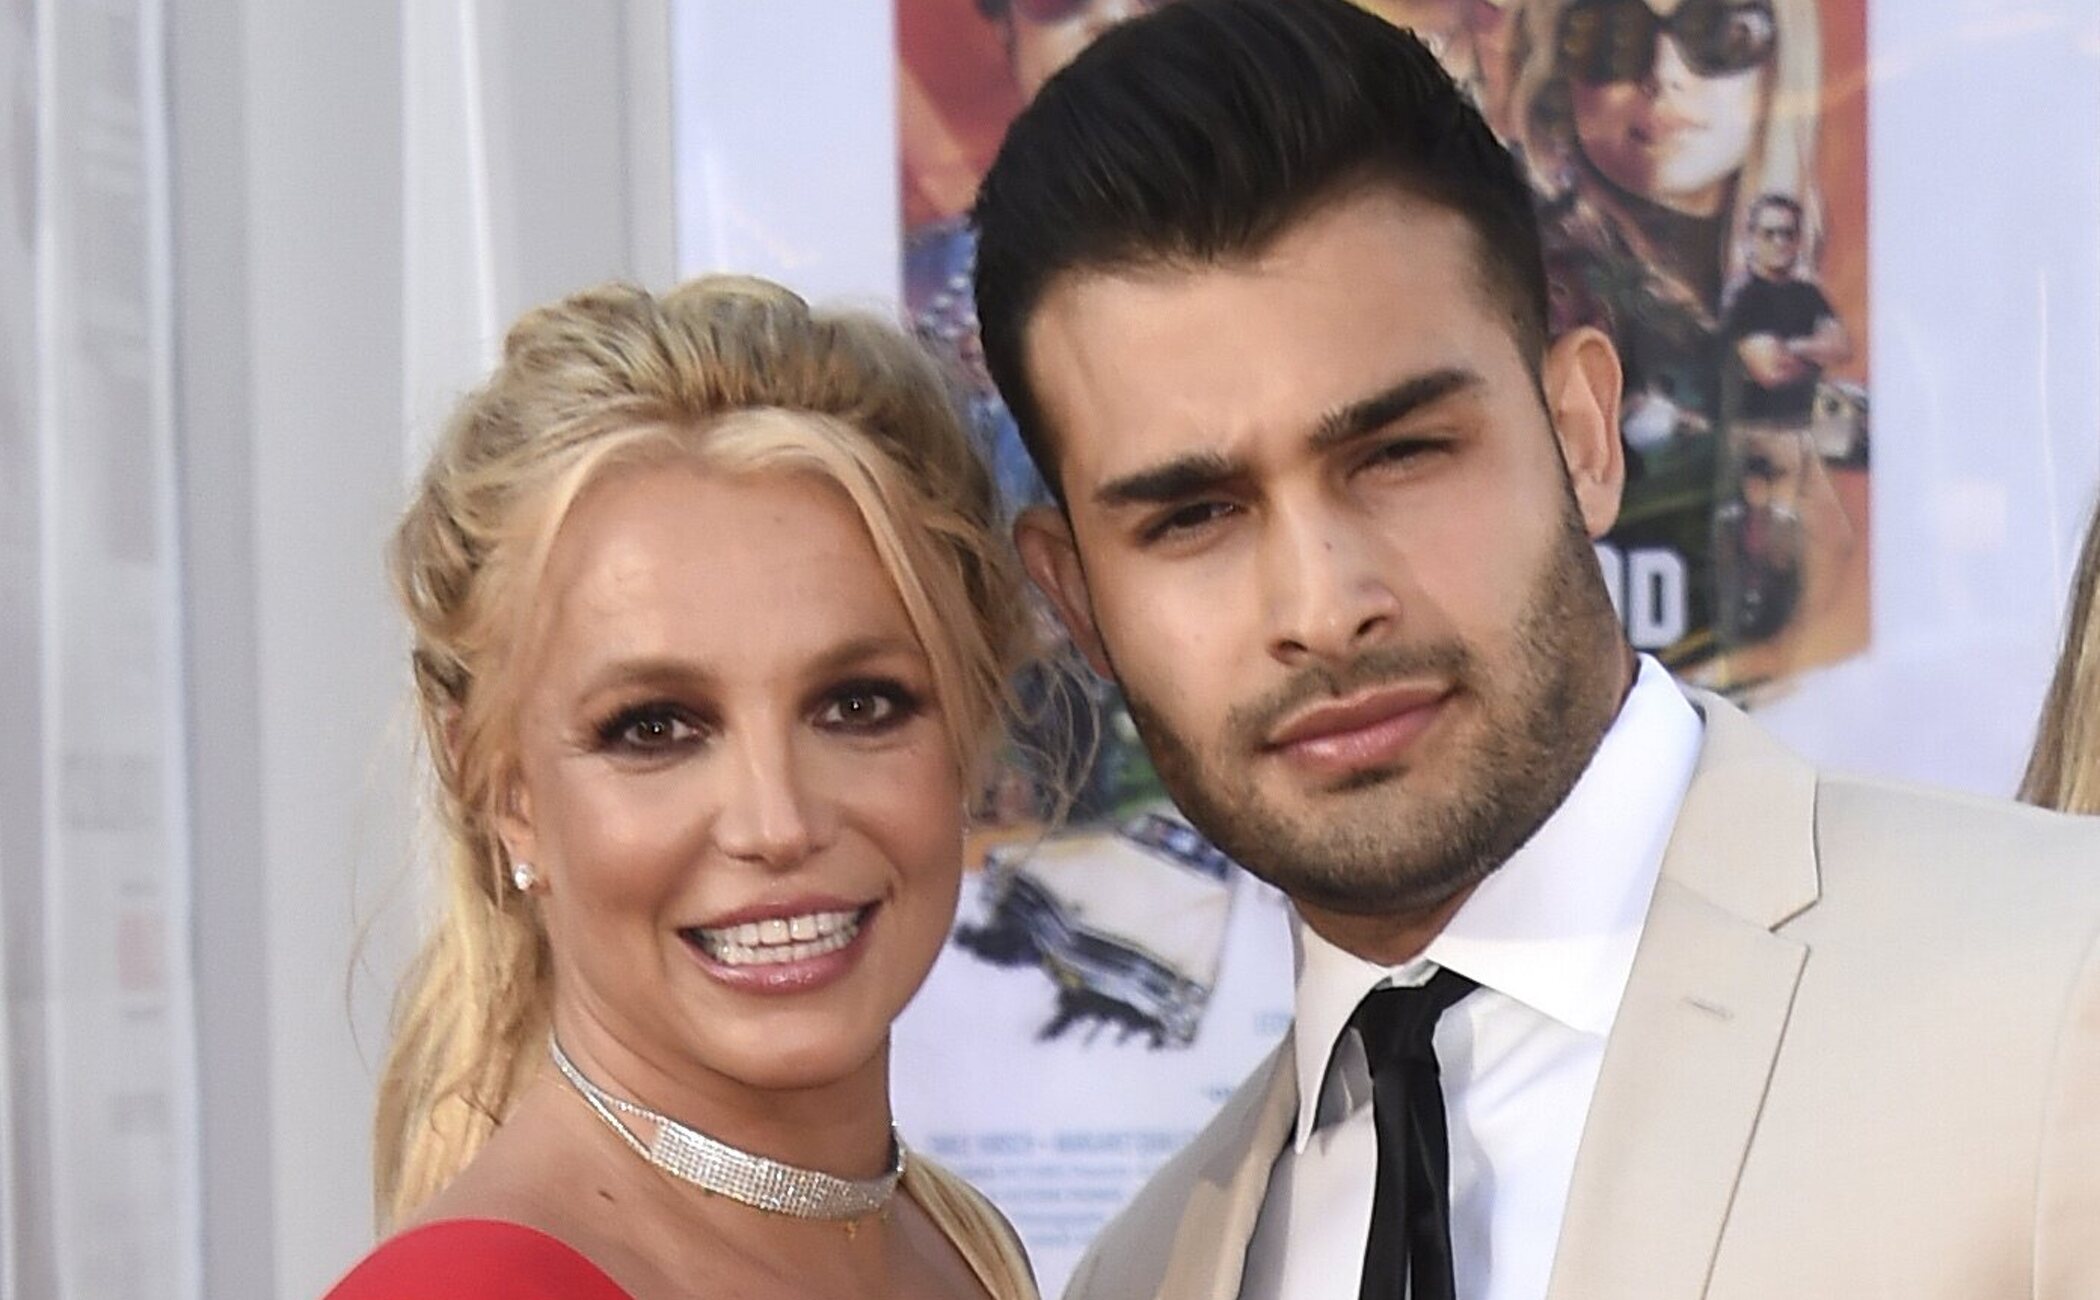 Britney Spears y Sam Asghari se divorcian tras 14 meses casados